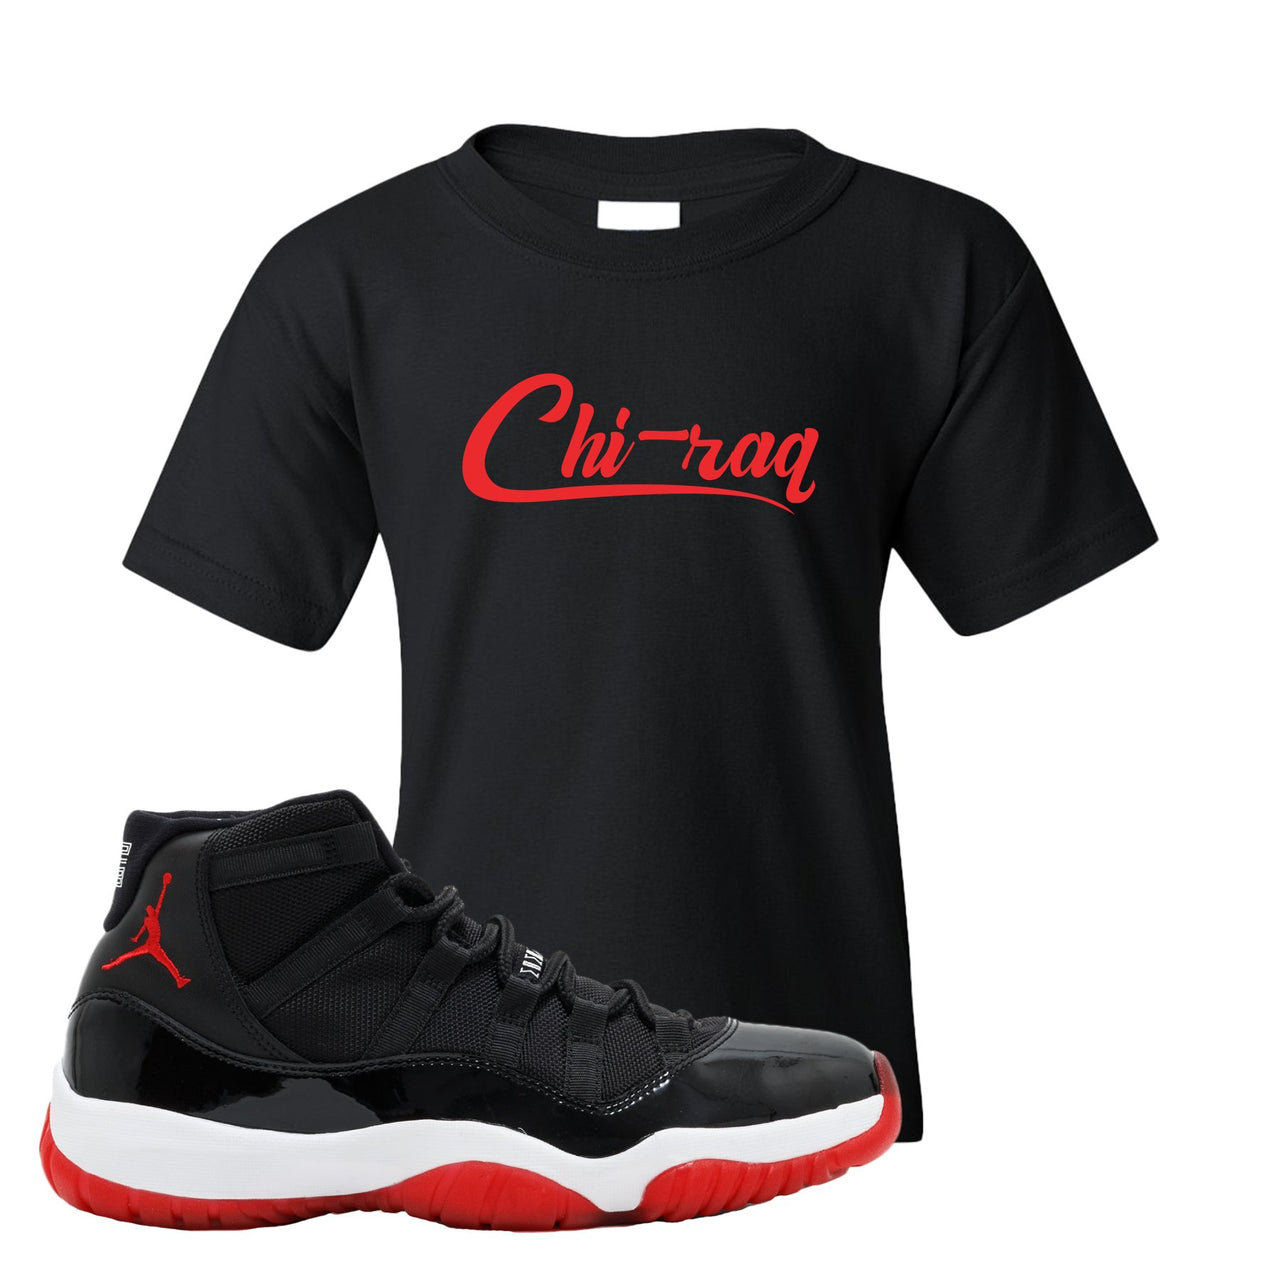 Jordan 11 Bred Chi-raq Black Sneaker Hook Up Kid's T-Shirt